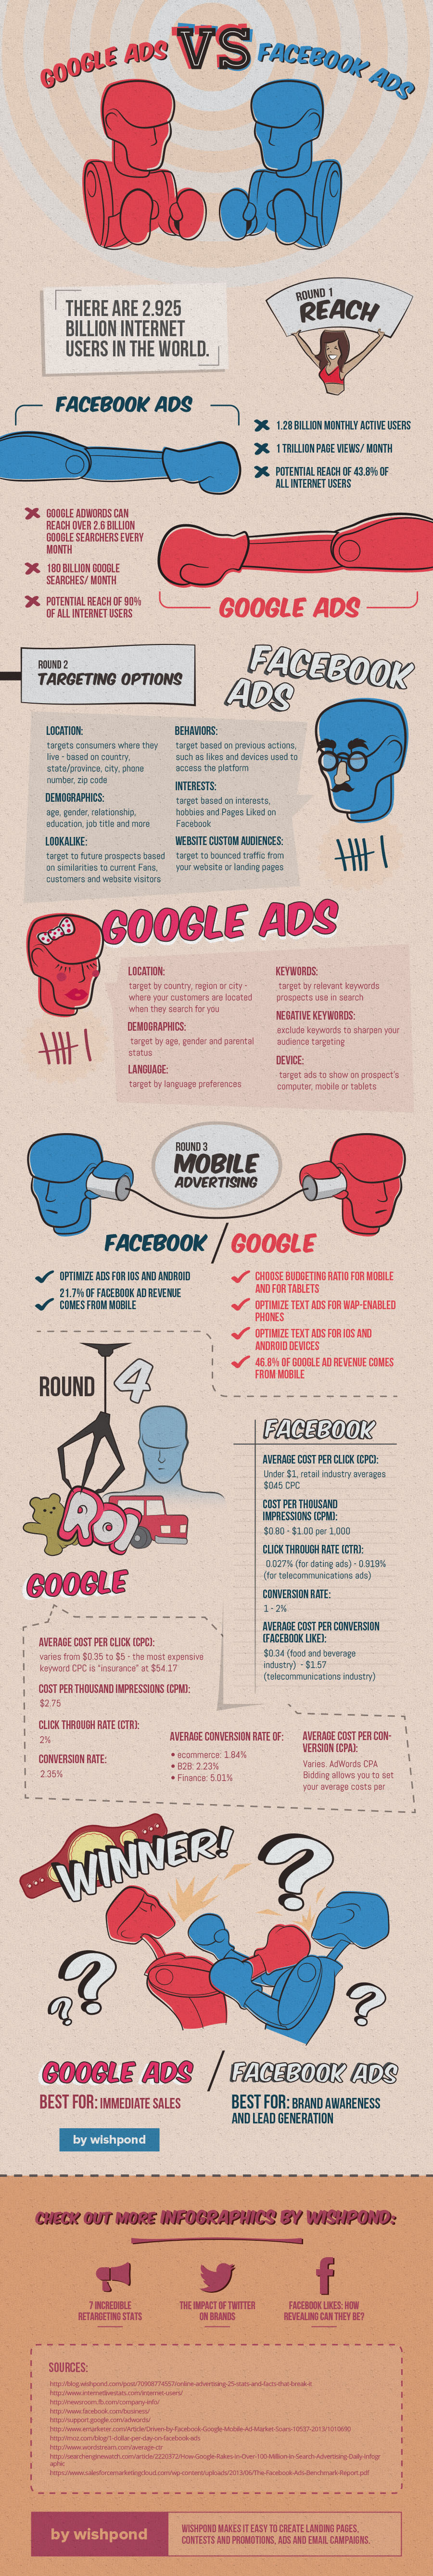 infografia de google adwords vs facebook ads